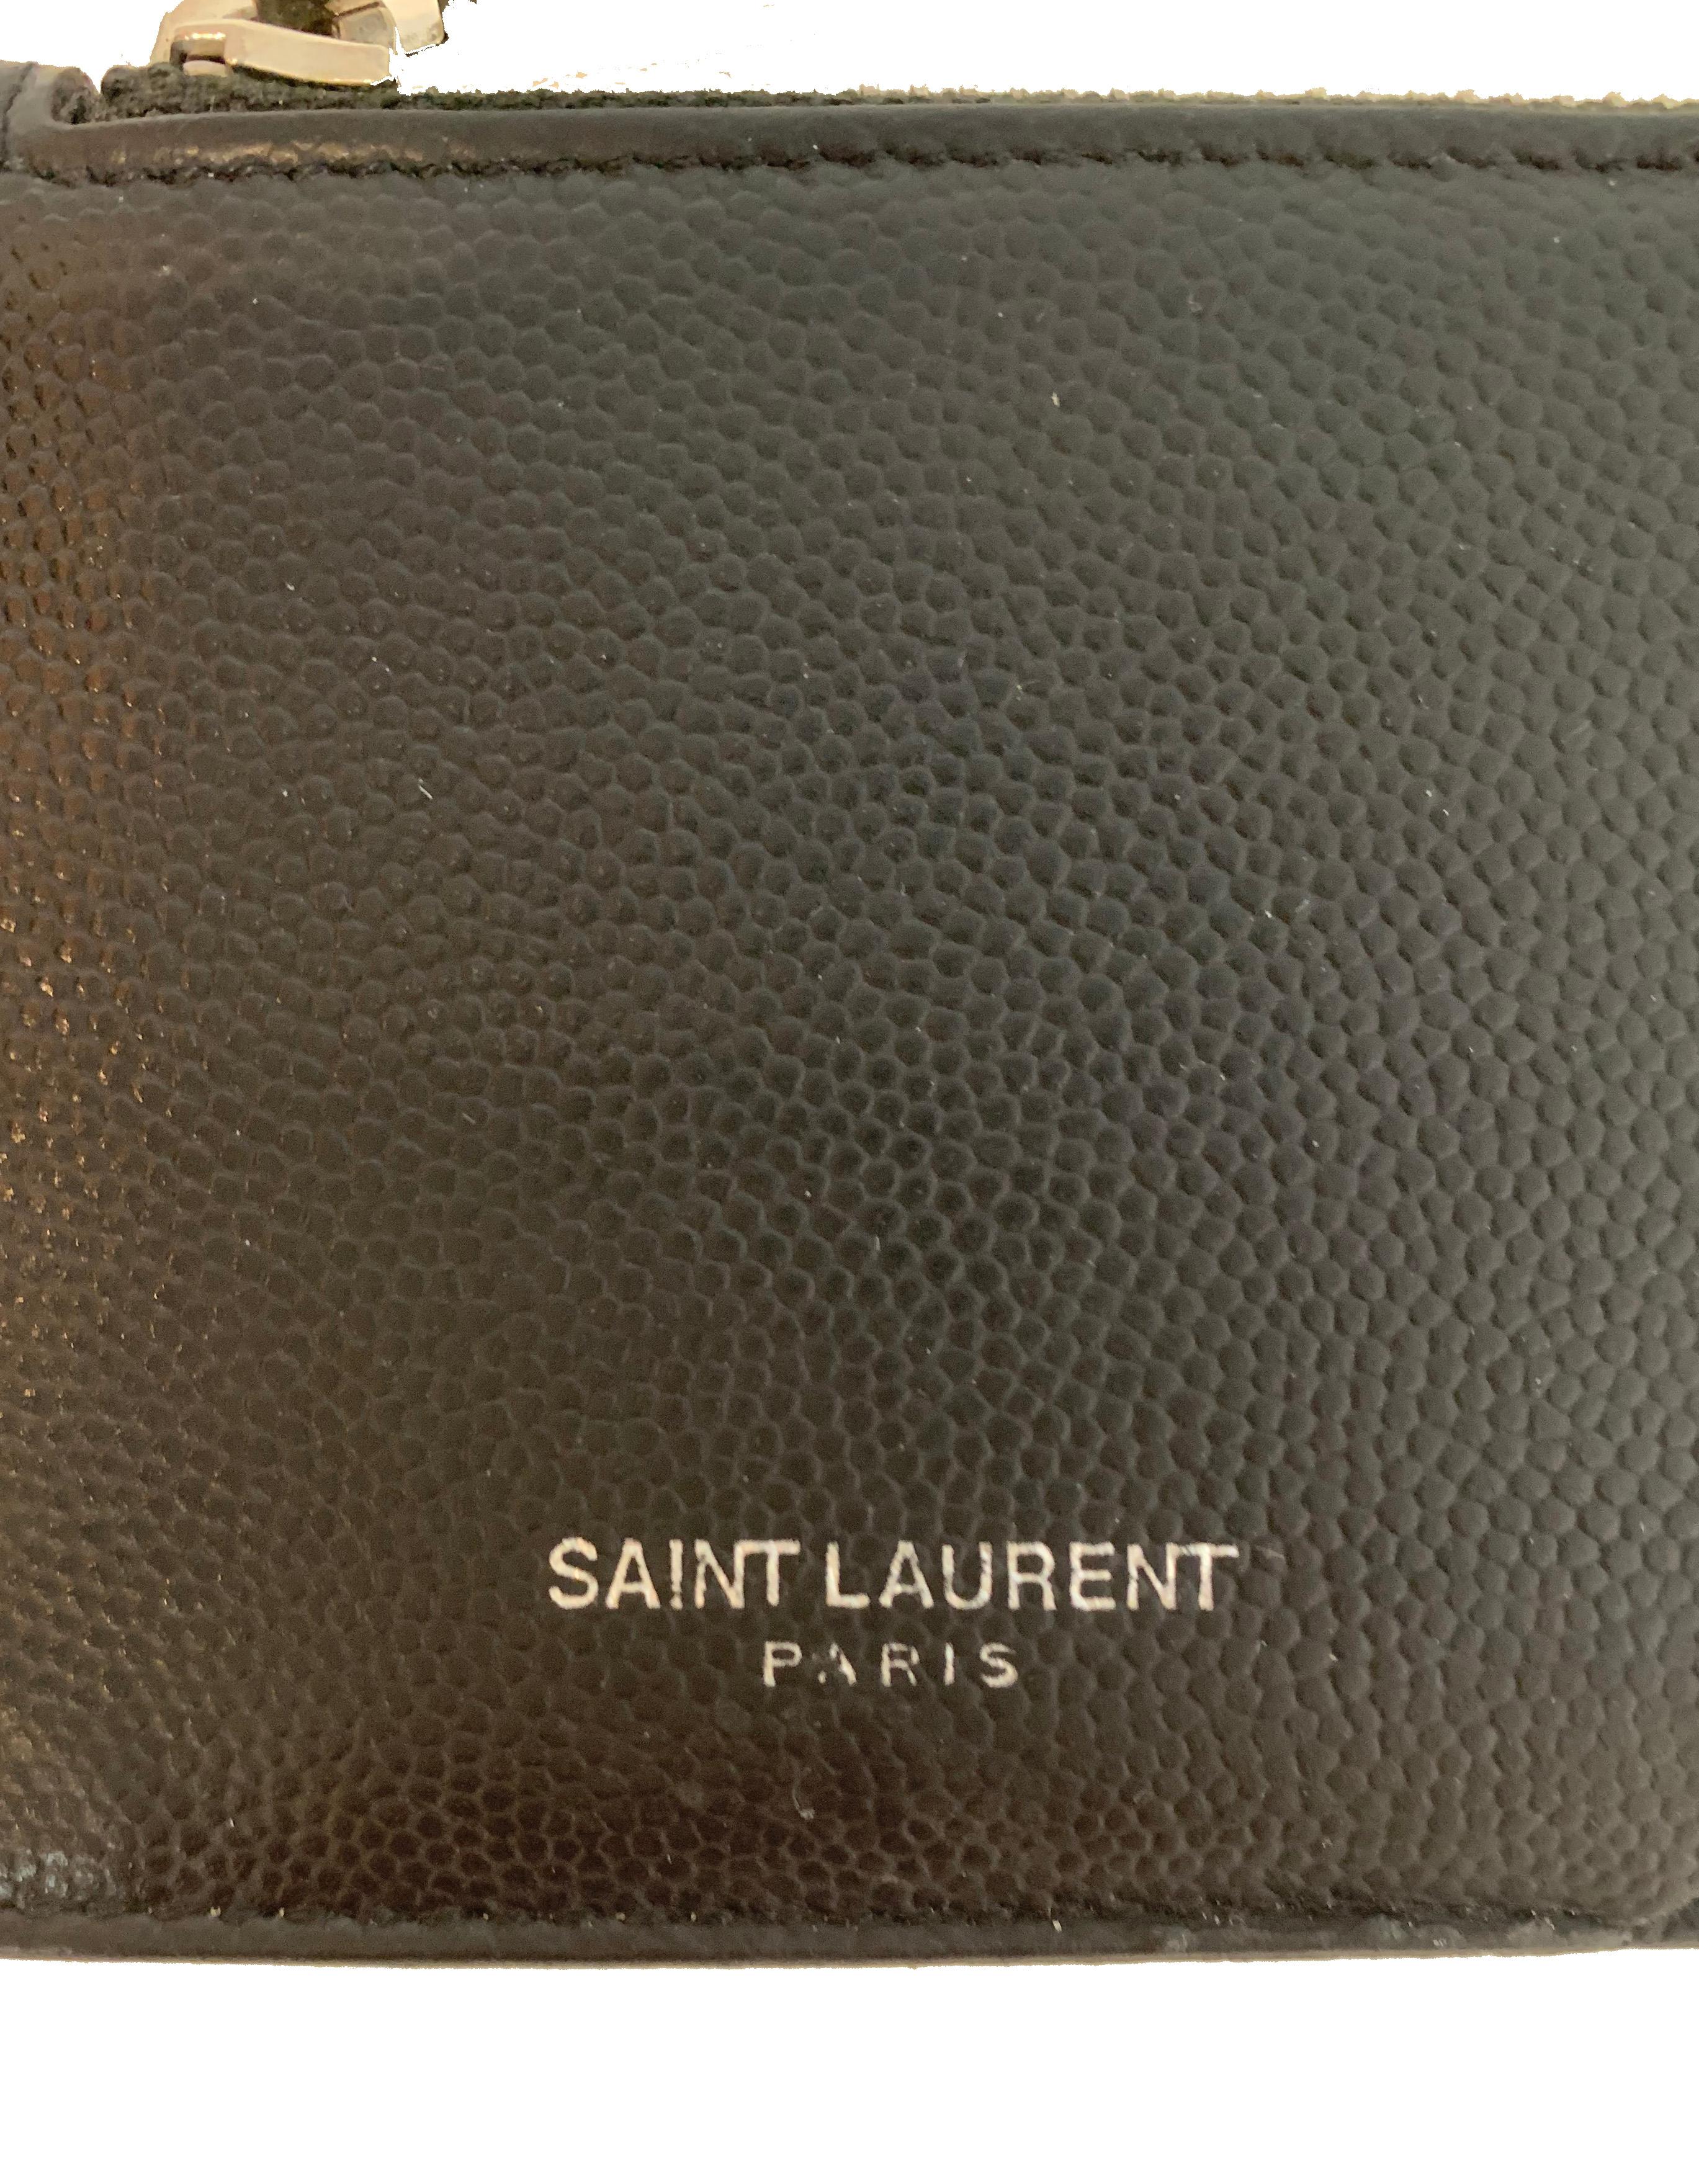 Saint Laurent Unisex Black Textured Leather Zip Top Card Holder rt. $295 4